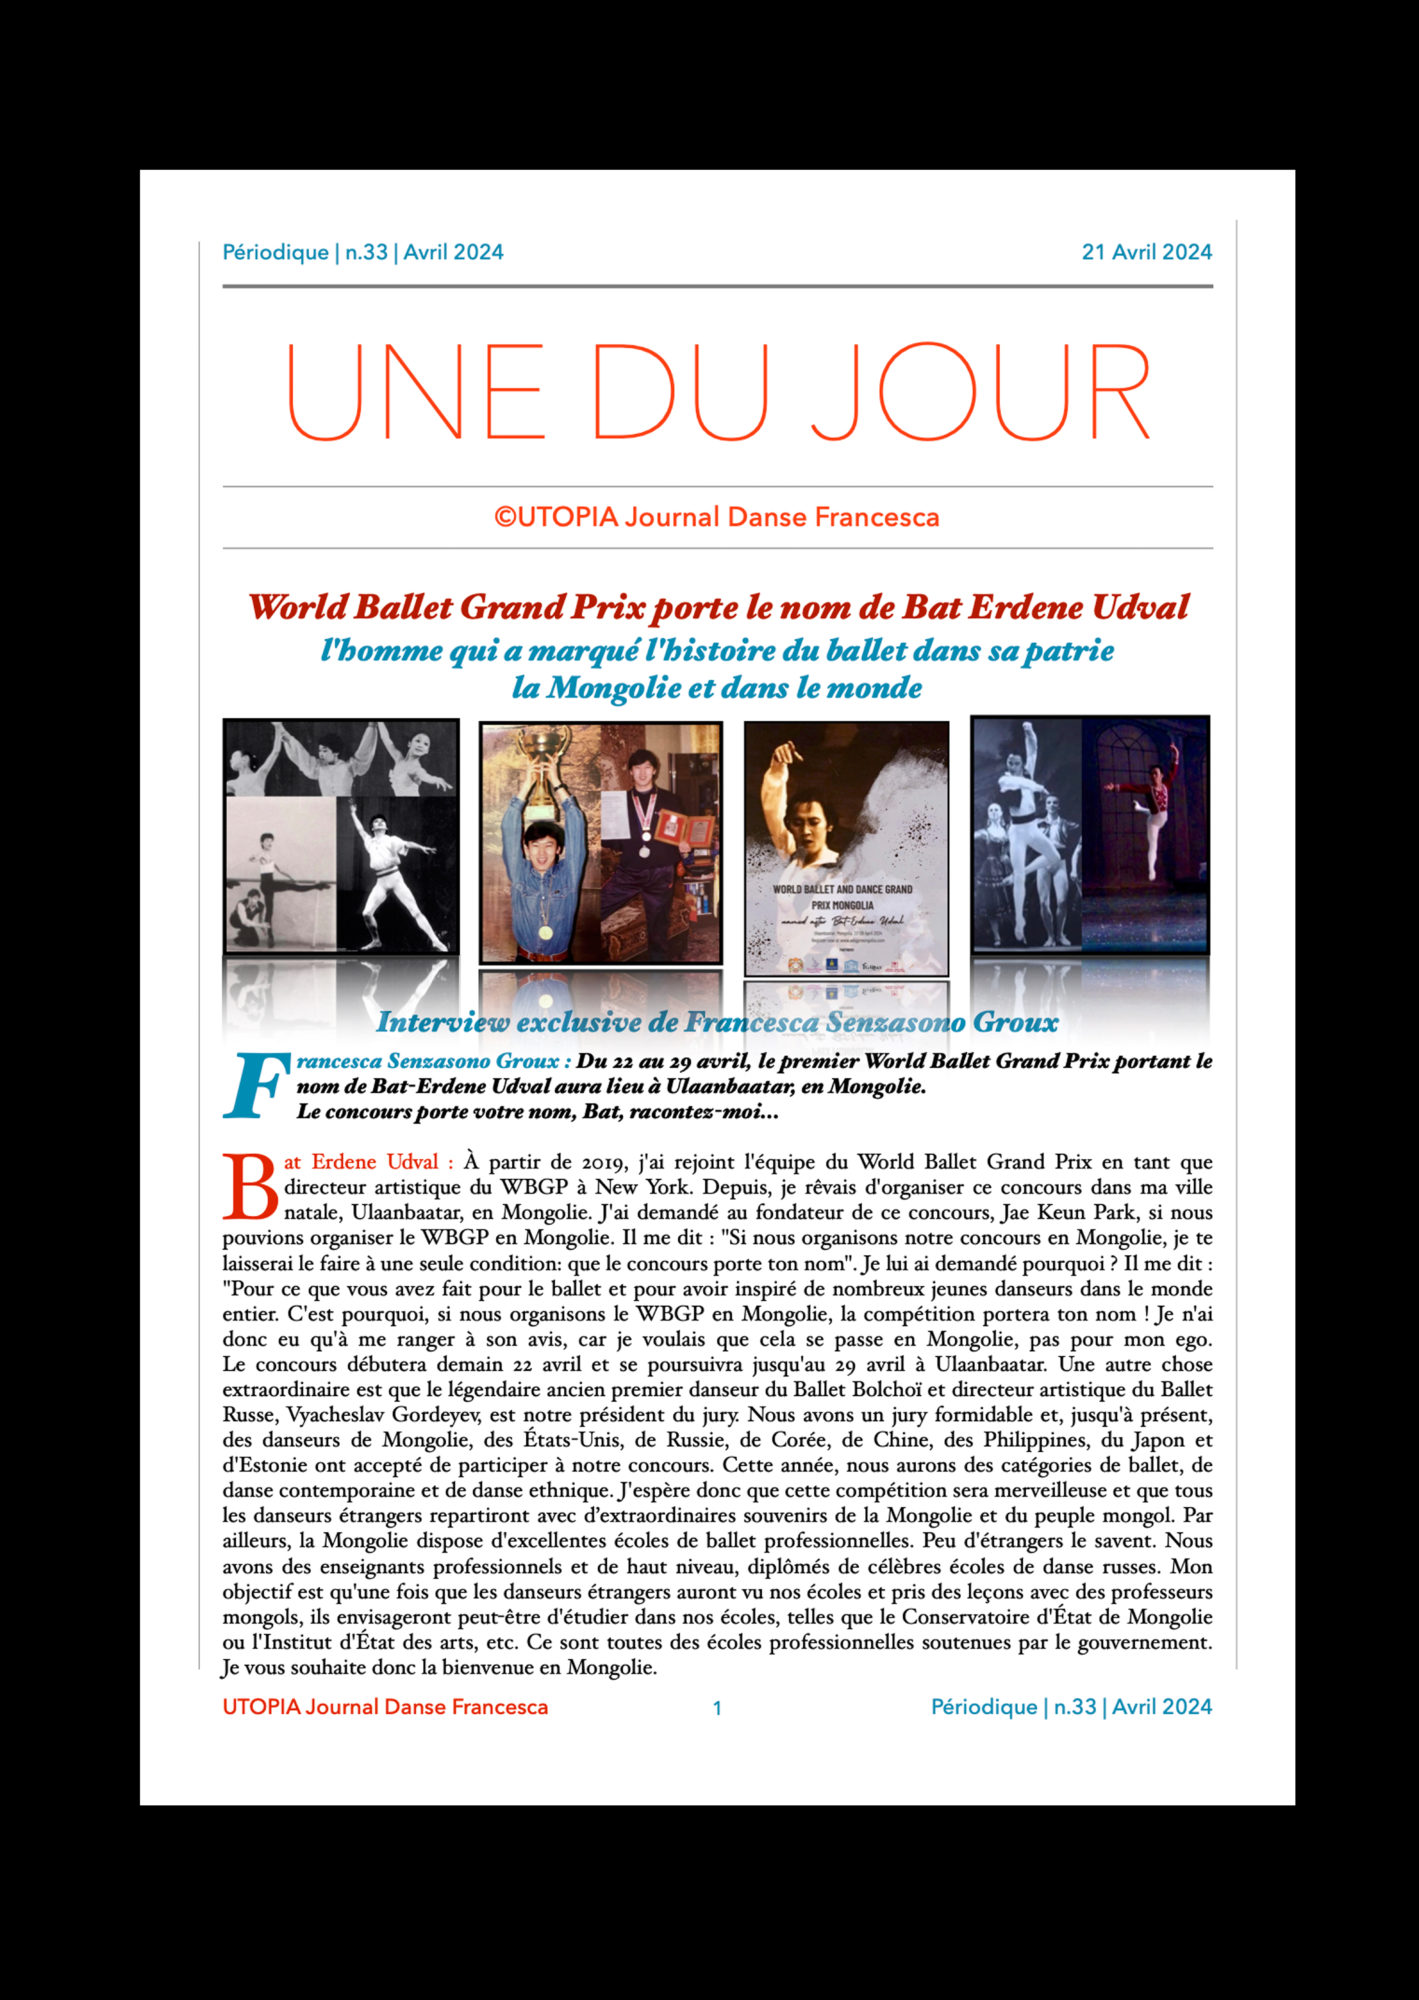 ©UTOPIA Journal Danse Francesca Periodique n.33 21 Avril 2024 page 1